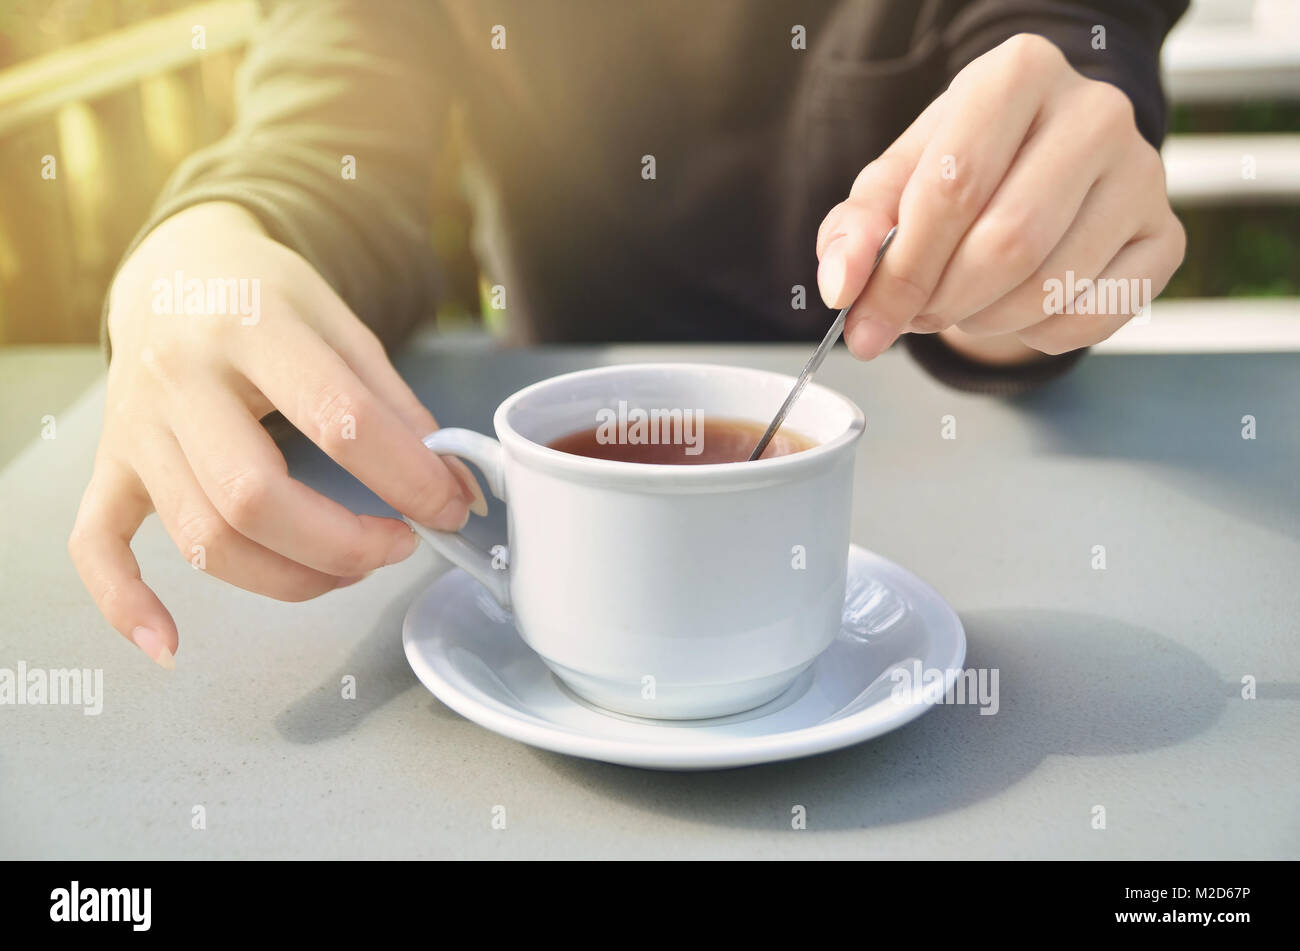 https://c8.alamy.com/comp/M2D67P/girls-hand-stirring-a-cup-of-tea-M2D67P.jpg